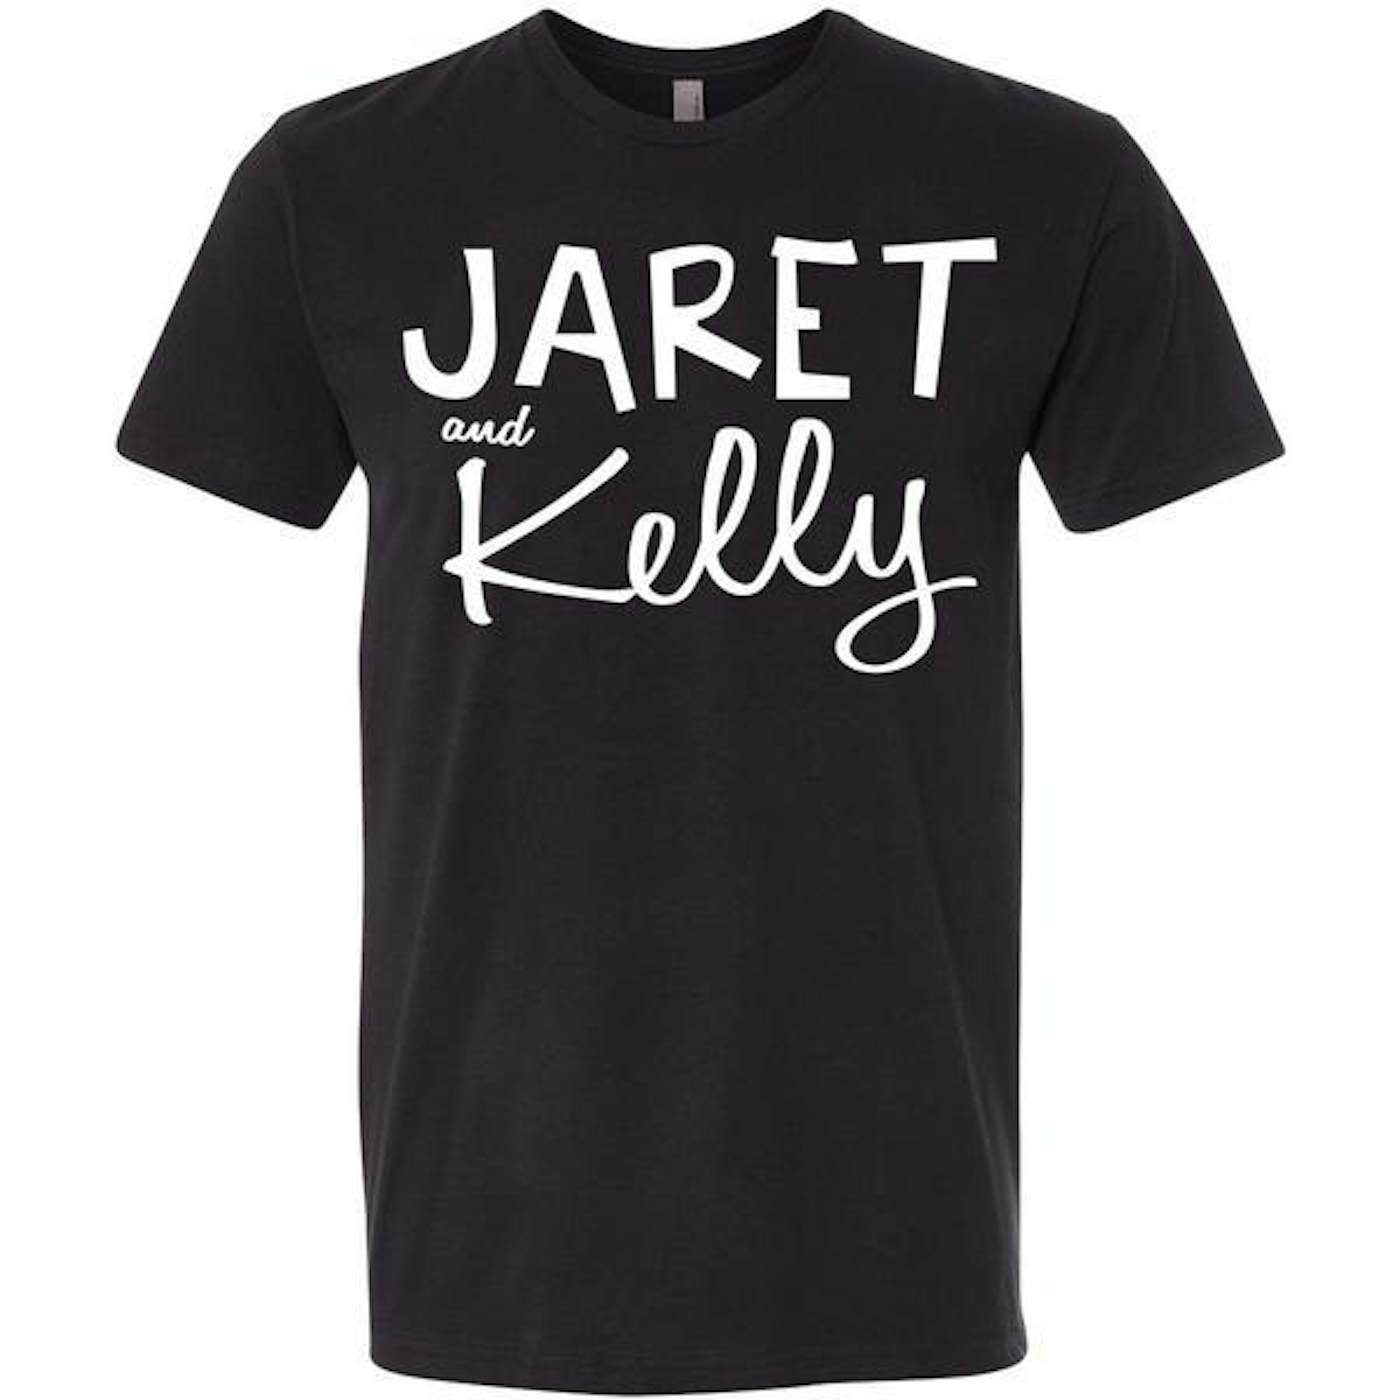 Jaret and Kelly - Logo Tee